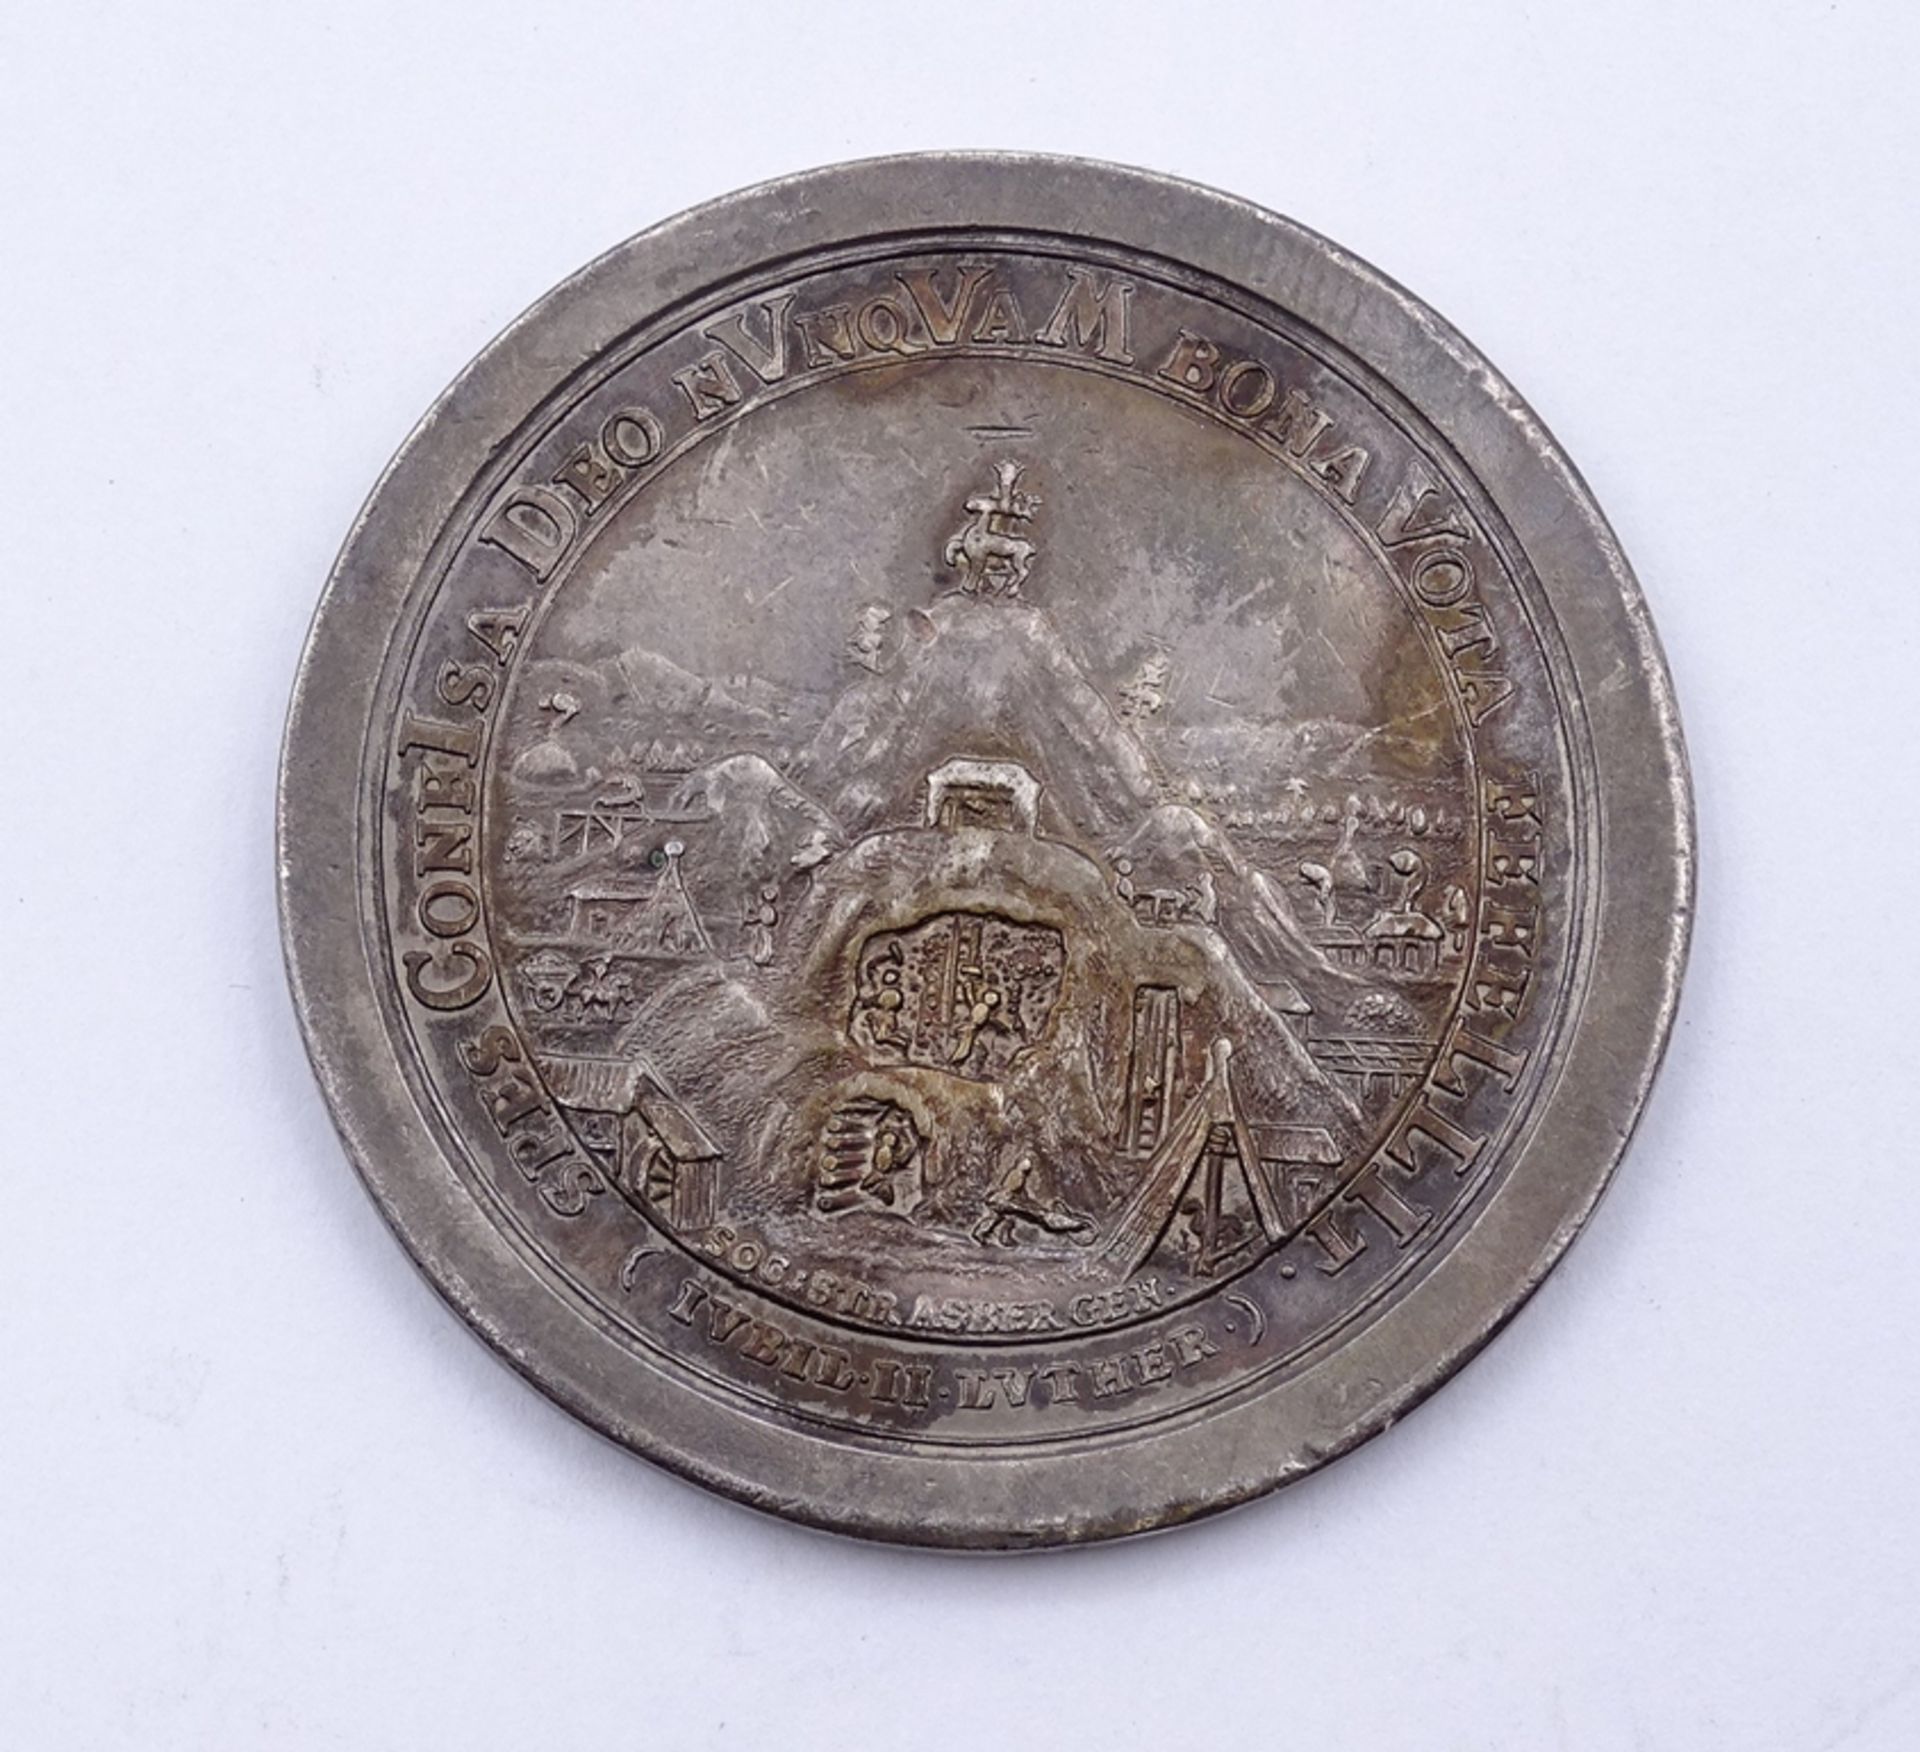 Martin Luther Medaille, D. 42,7mm, Kupfer Zinn Legierung, Rand GB gemarkt - Bild 2 aus 2